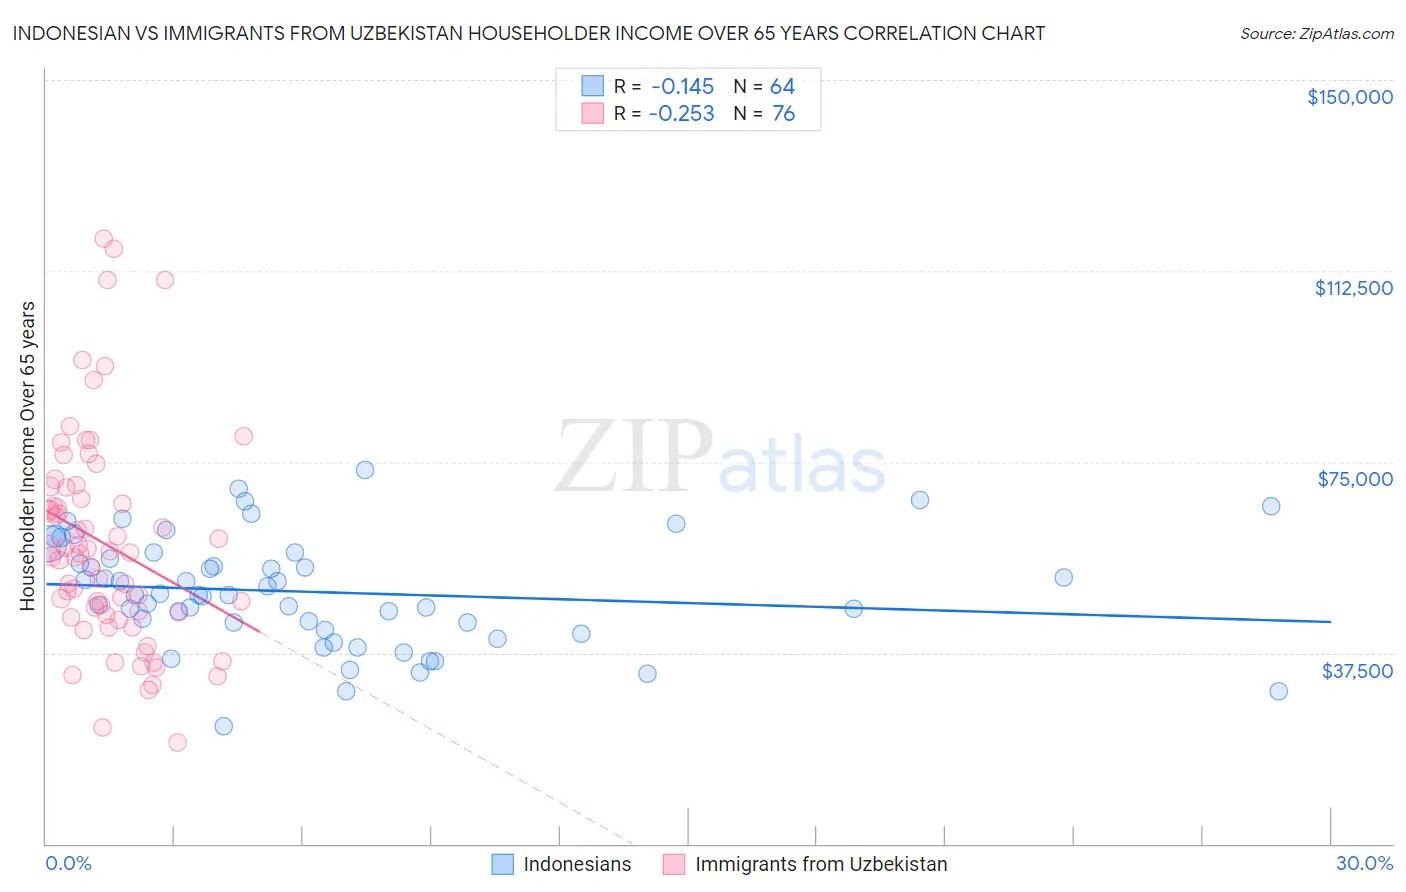 Indonesian vs Immigrants from Uzbekistan Householder Income Over 65 years